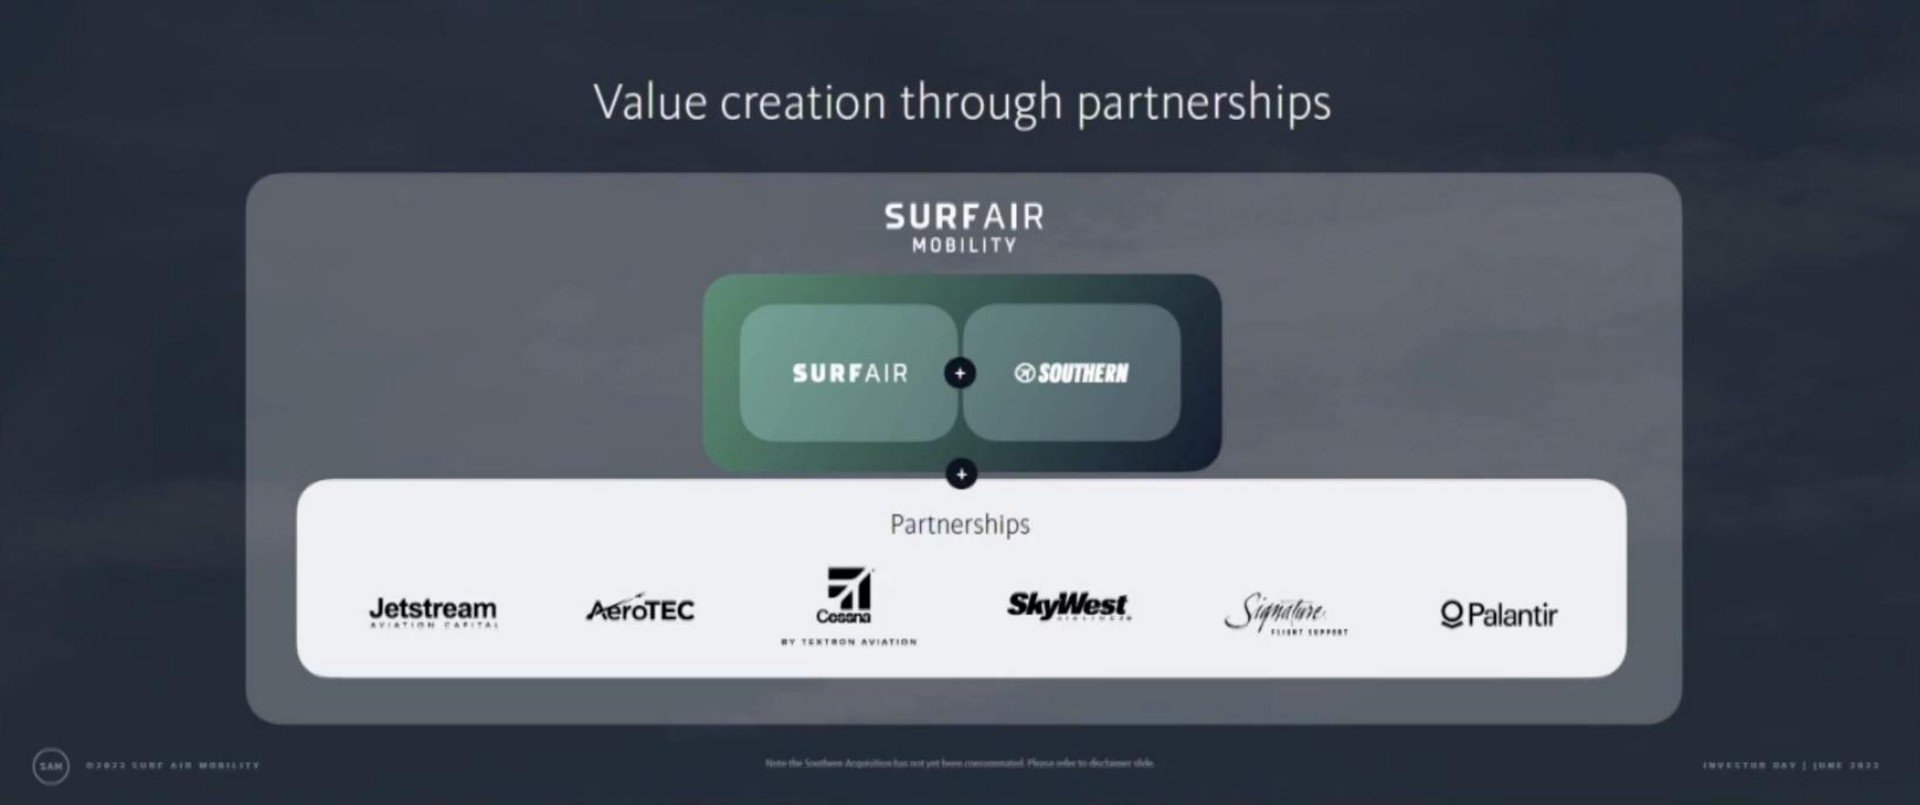 value creation through partnerships ala southern partnerships | Surf Air